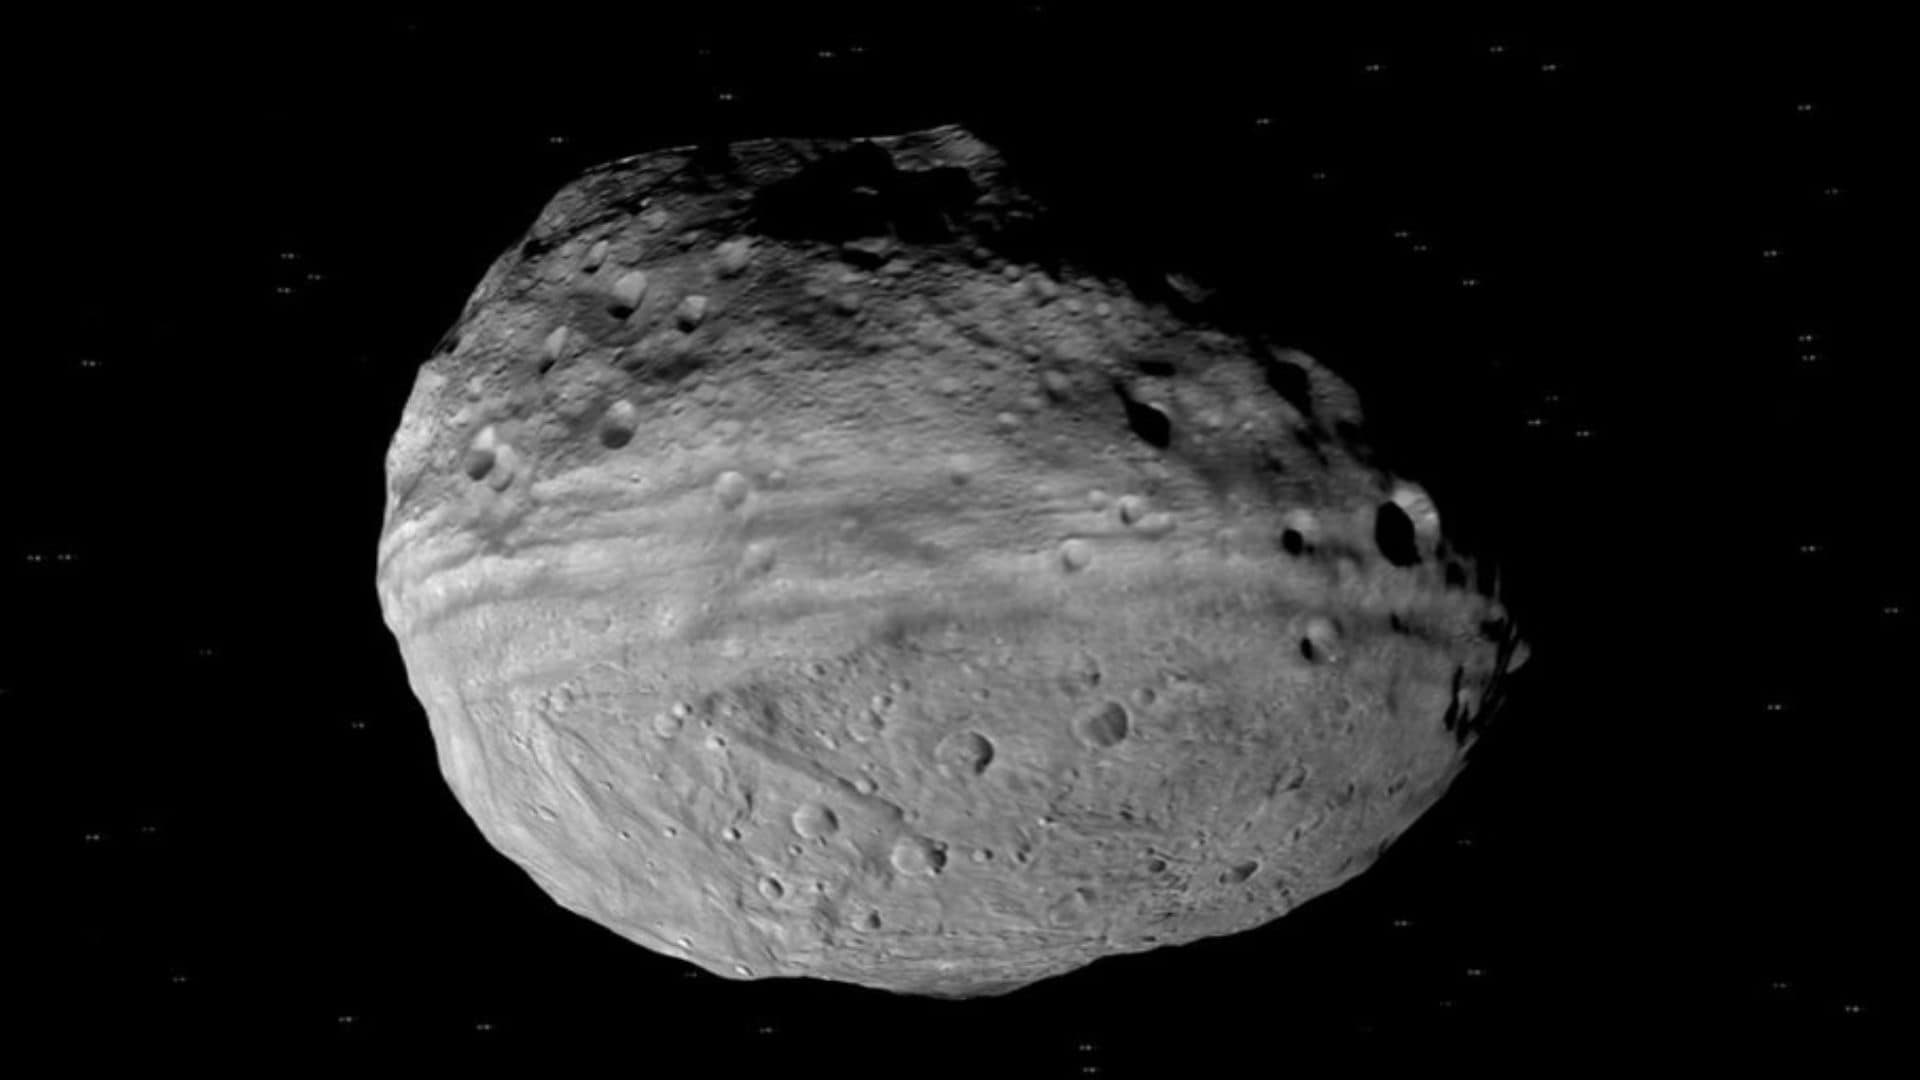 Image of the asteroid Vesta captured by NASA’s Dawn spacecraft